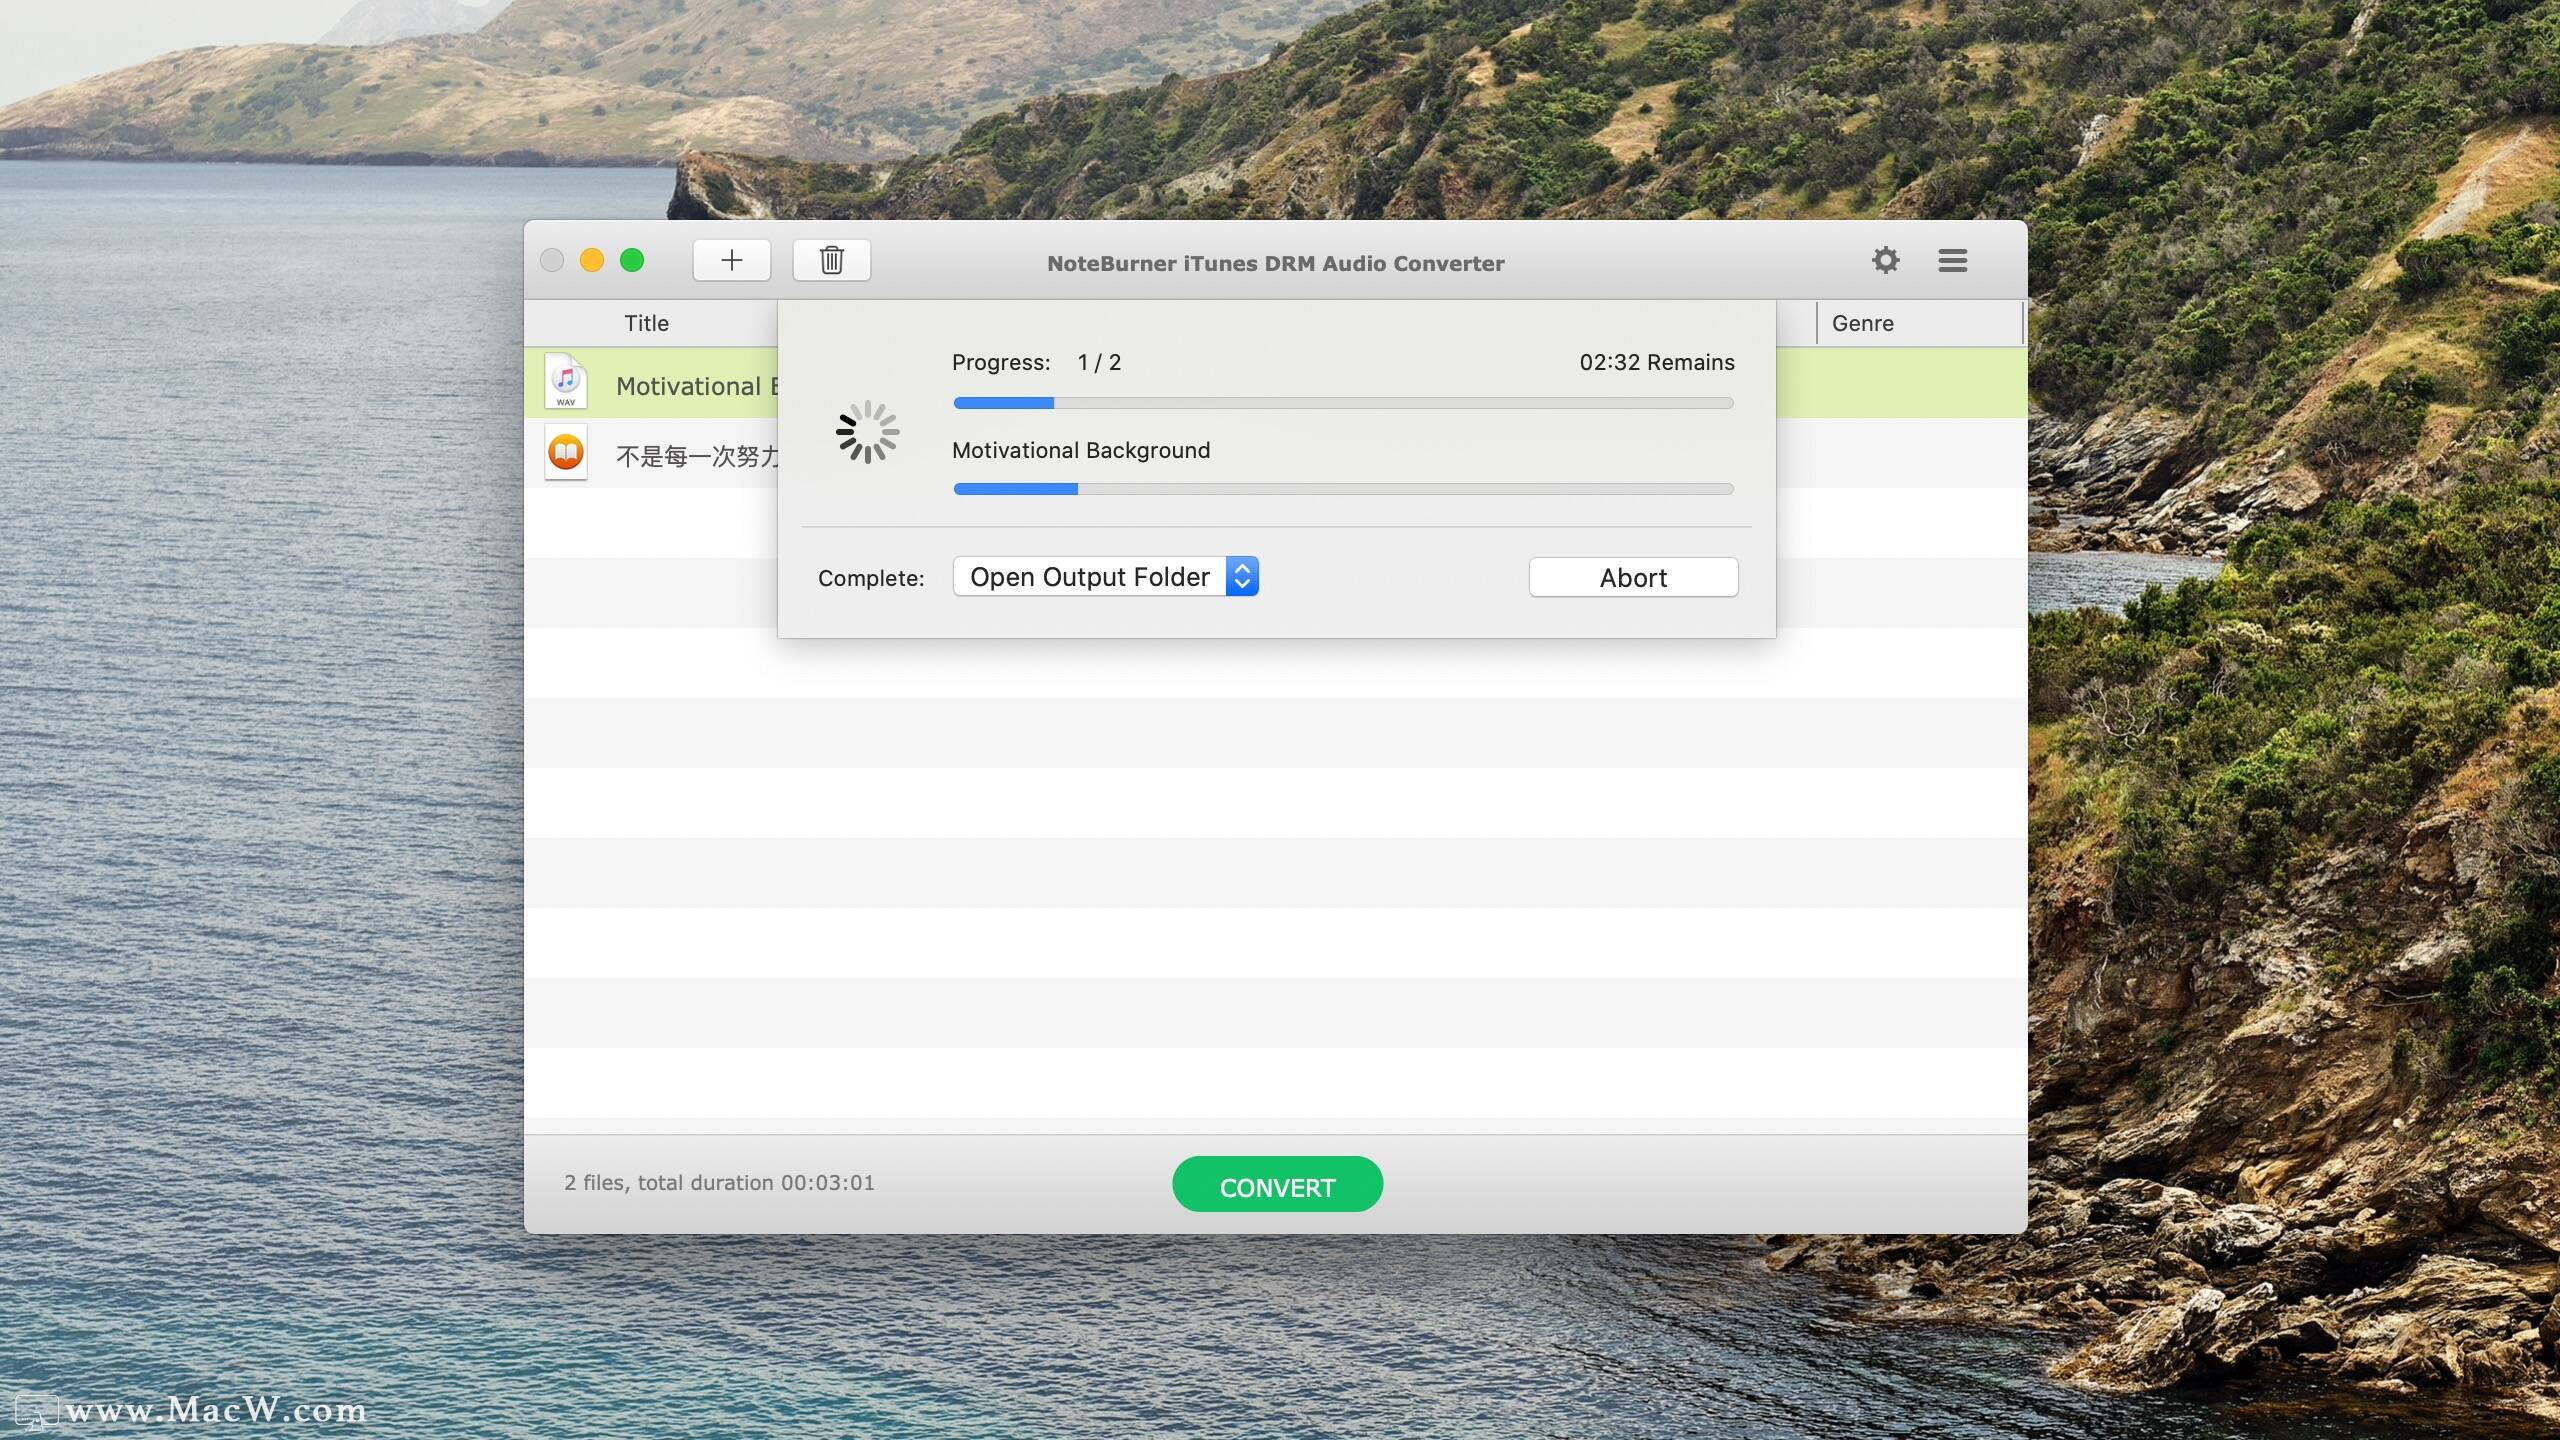 Mac 苹果DRM音频转换器 NoteBurner iTunes DRM Audio Converter 3.4.0 - 图2